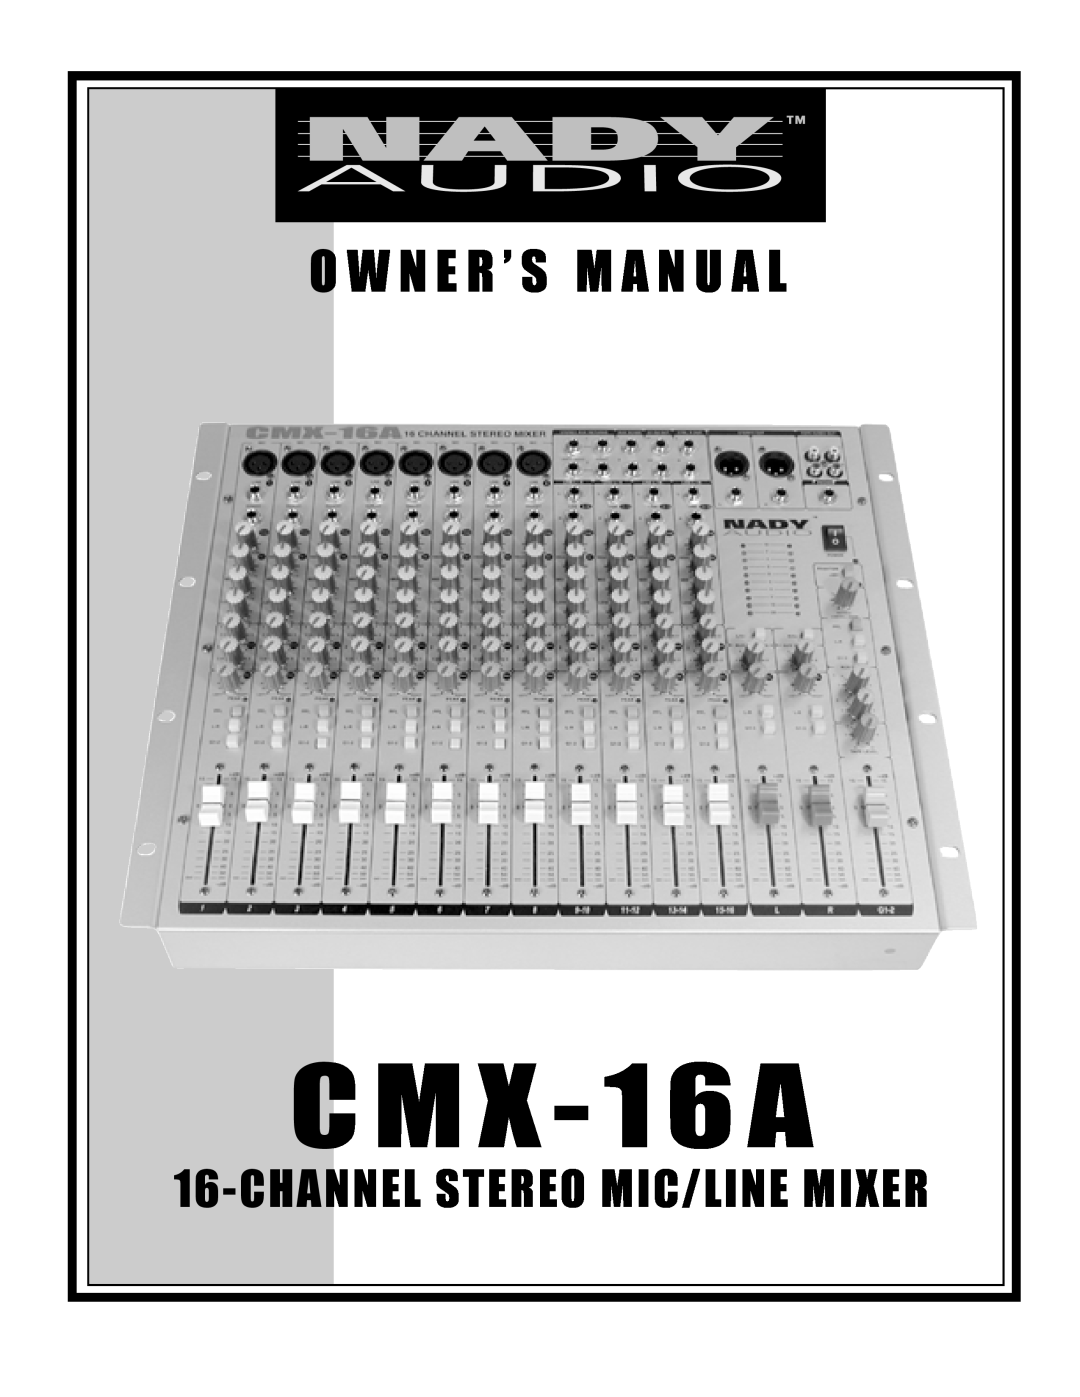 Nady Systems CMX-16A owner manual C M X - 1 6 A, O W N E R ’ S M A N U A L, Channel Stereo Mic/Line Mixer 